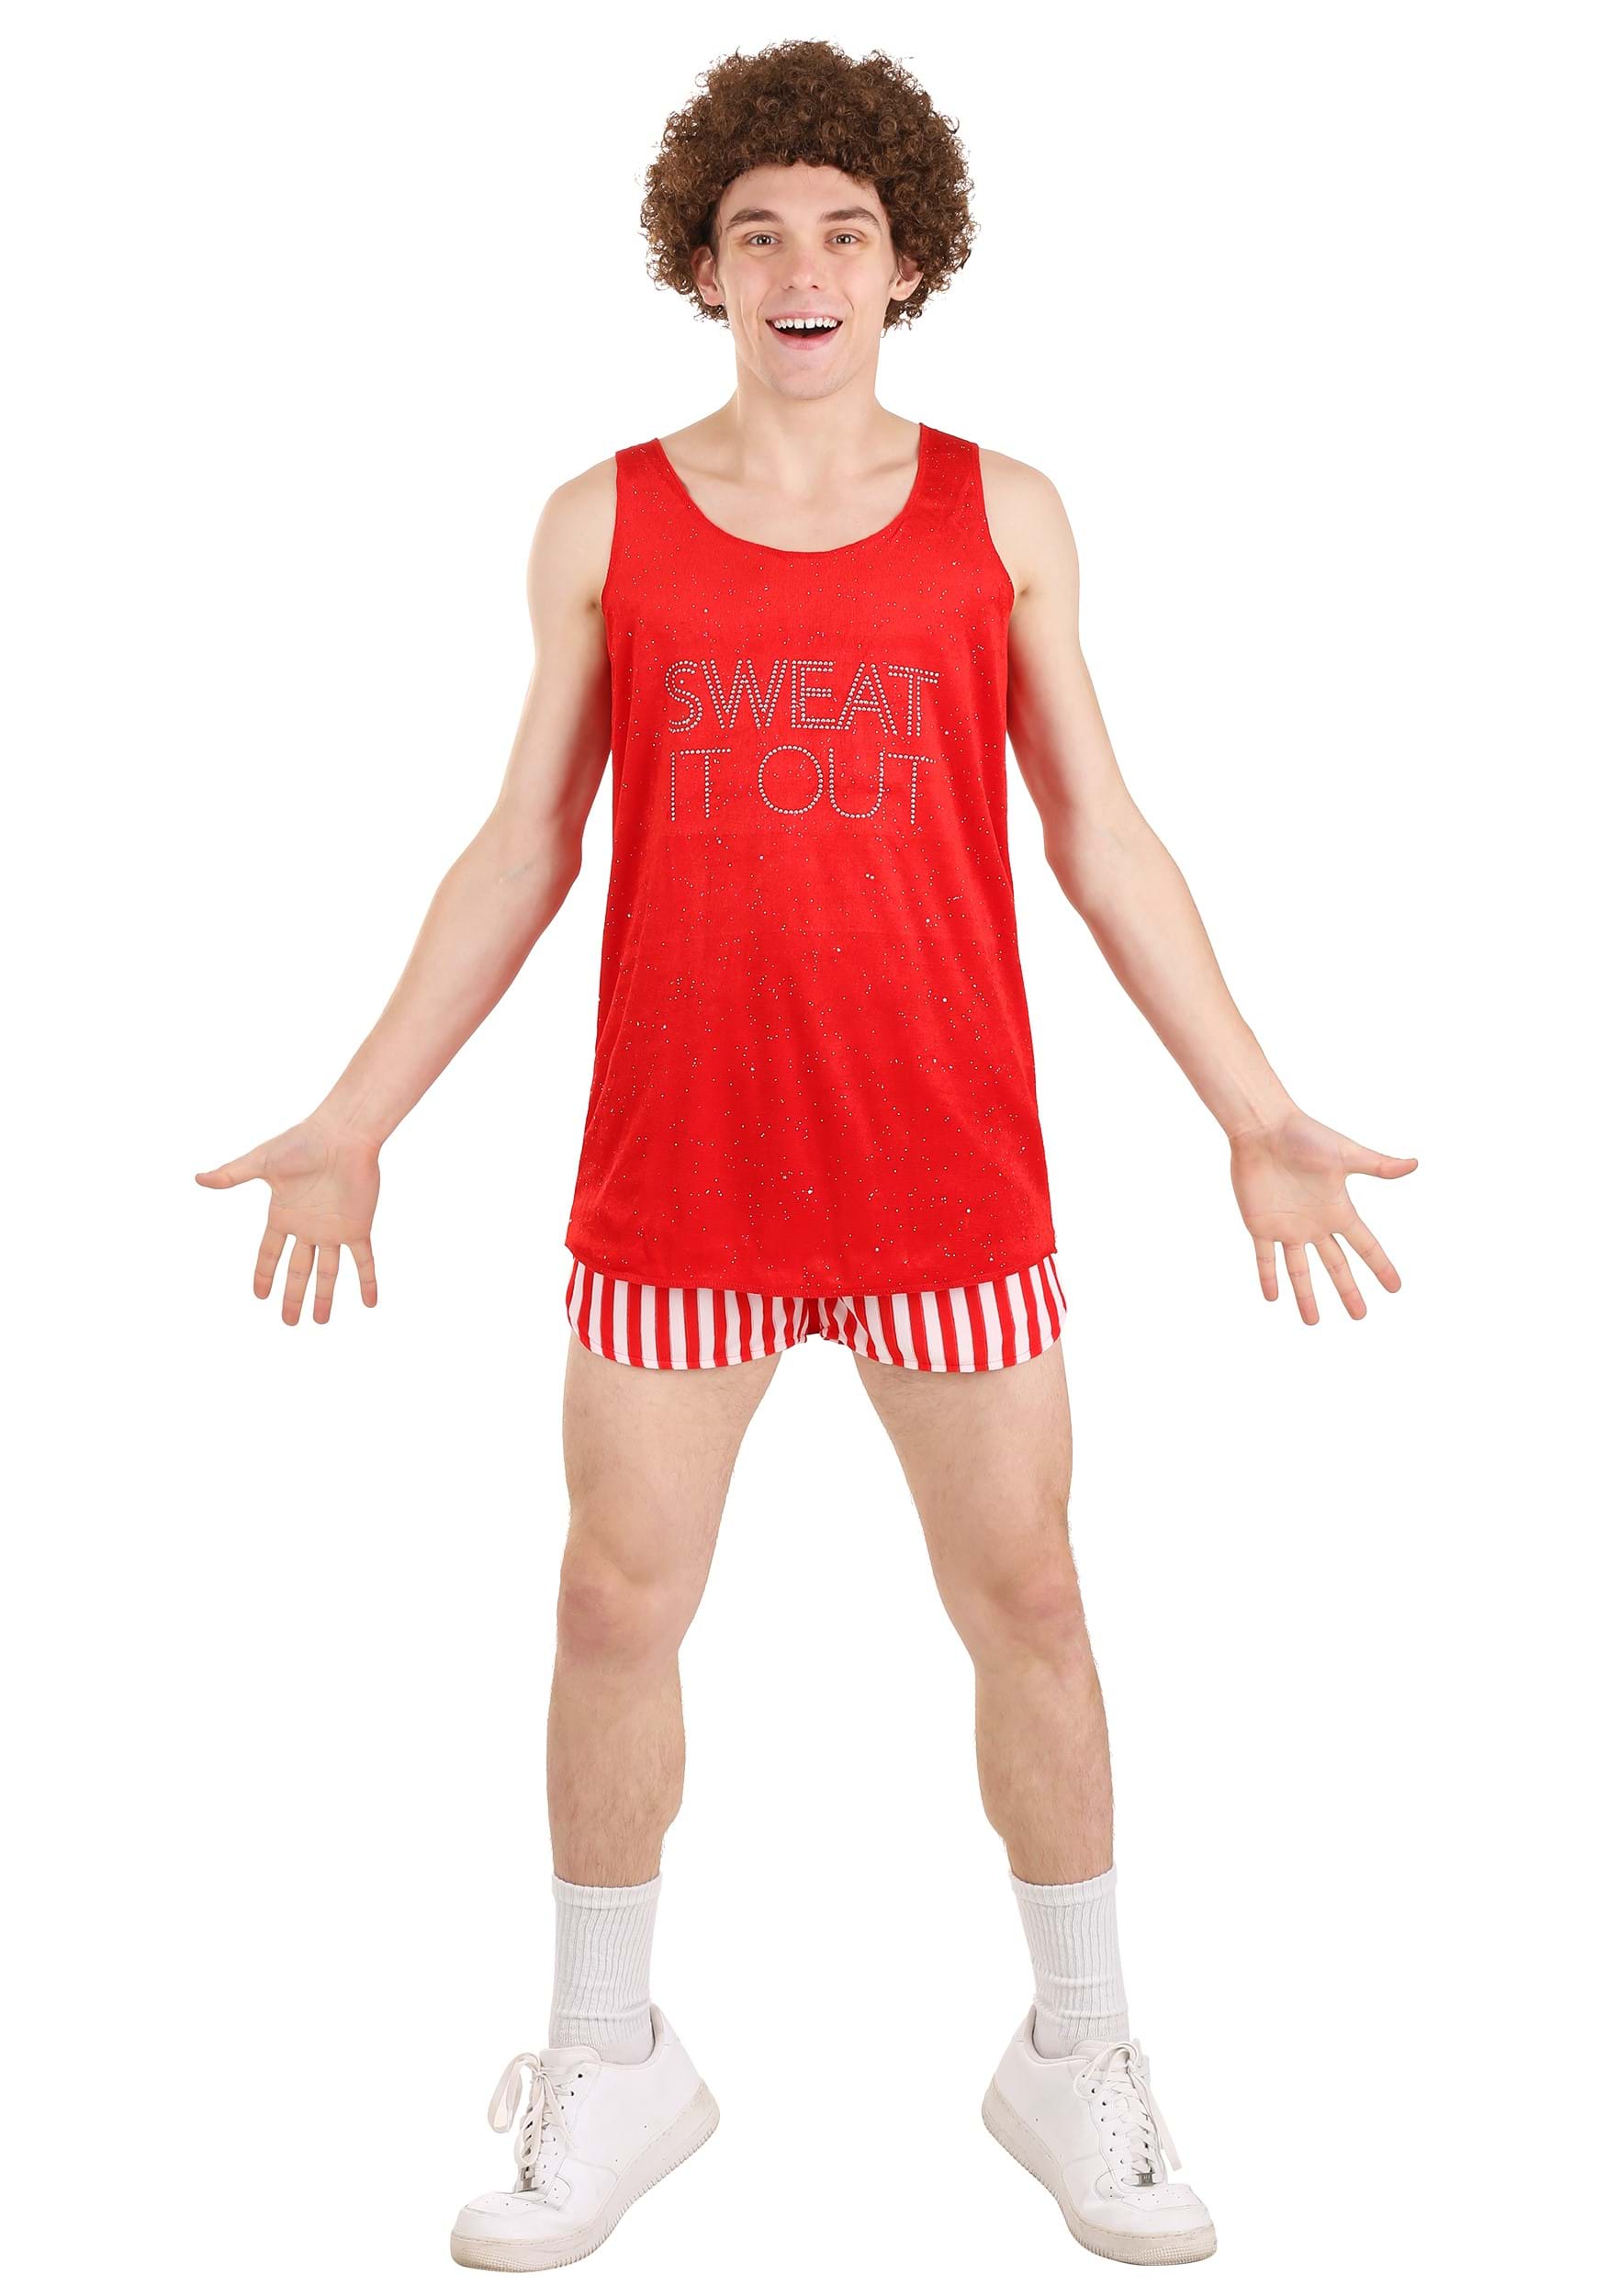 Photos - Fancy Dress Simmons FUN Costumes Richard  Costume for Men | Retro 80s Costume Ideas Red 